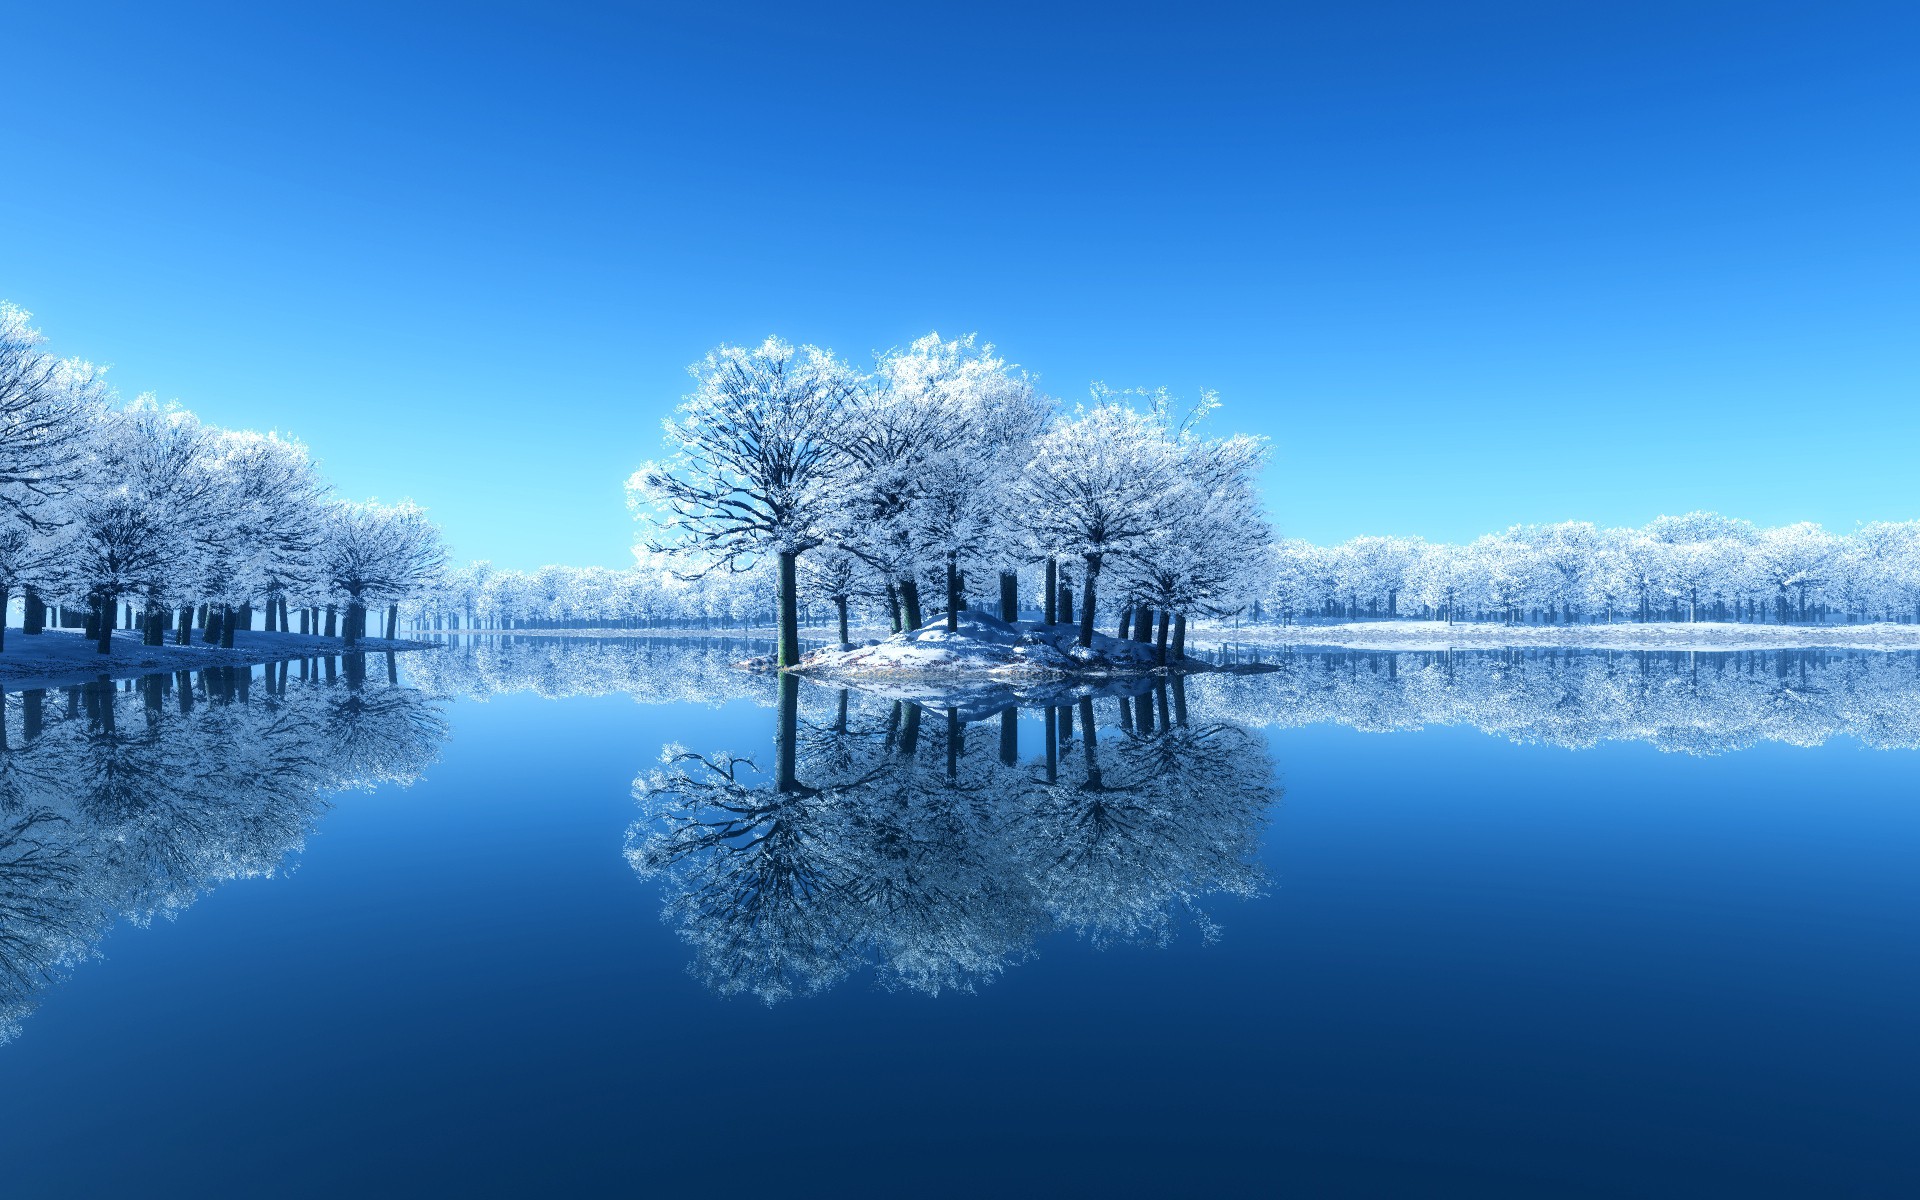 Winter scenery backgrounds Free Download Winter Scenery